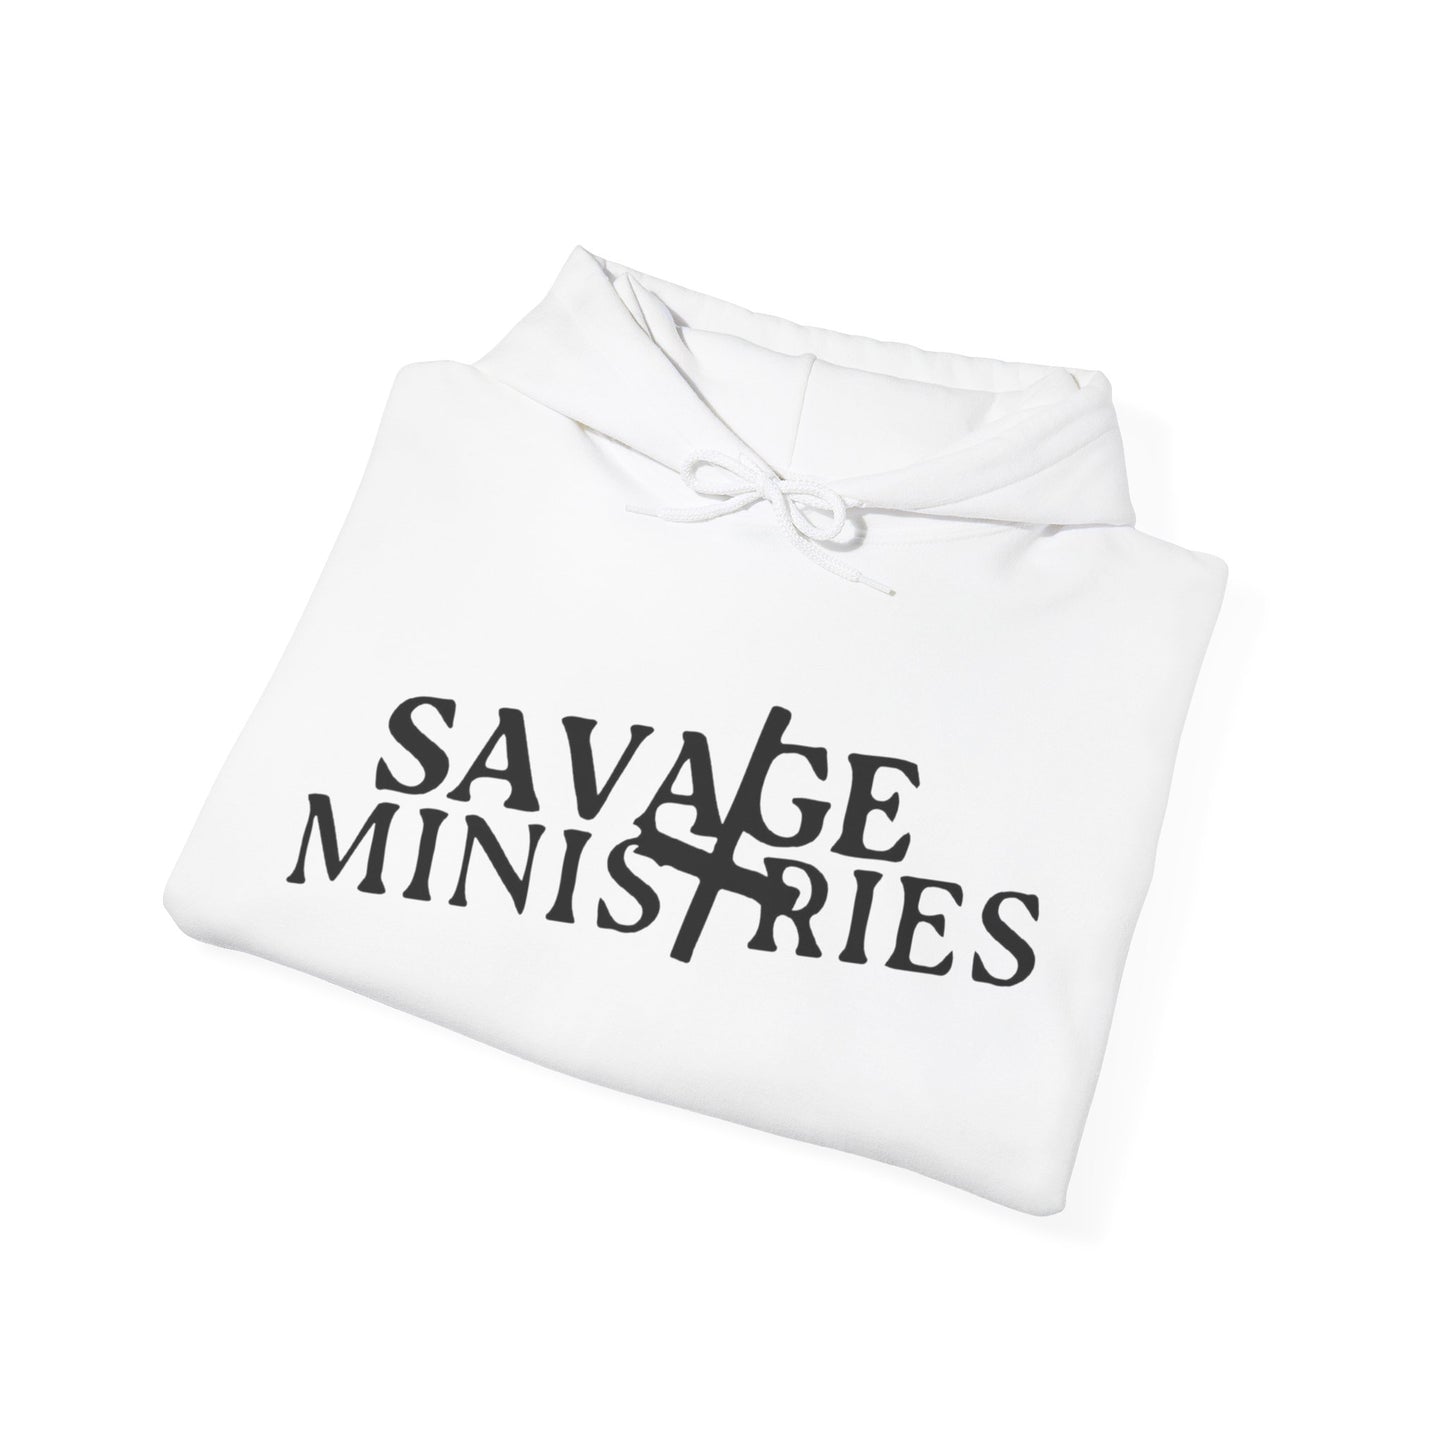 Savage Ministry Unisex Heavy Blend™ Hooded Sweatshirt with Pentagremlin/Savager